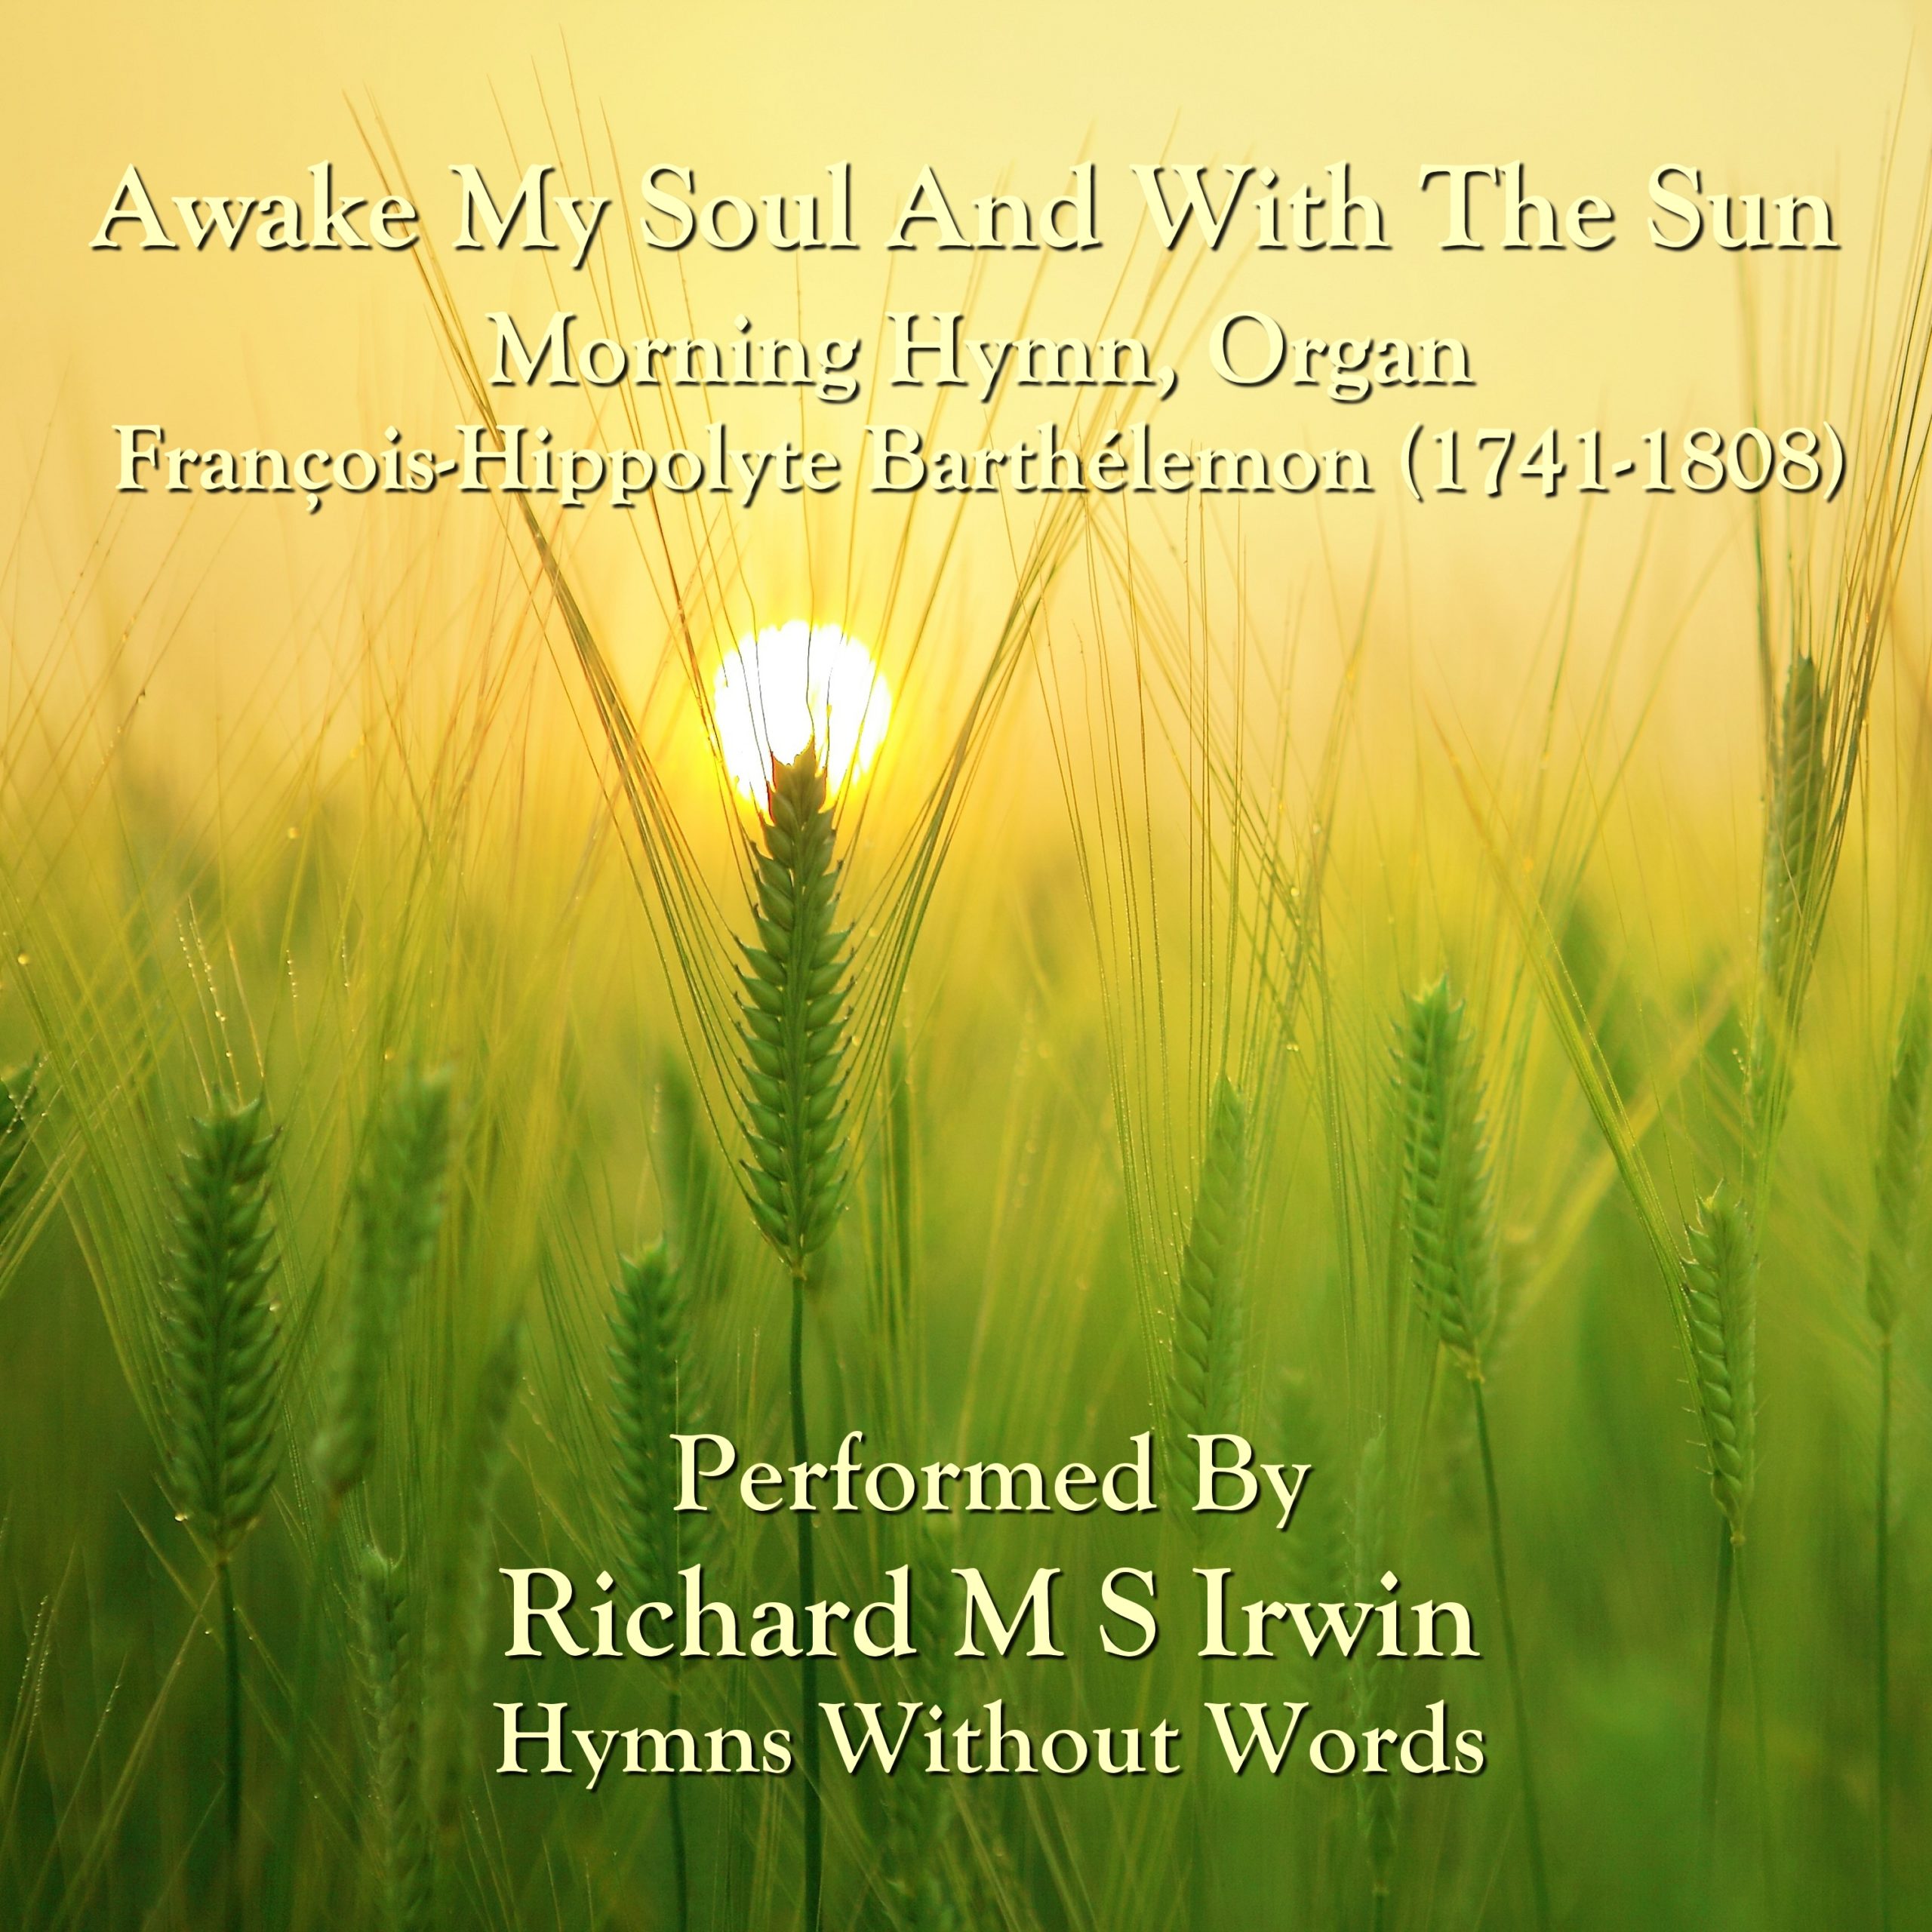 Awake My Soul And With The Sun (Morning Hymn, Organ, 5 Verses) - Hymns ...